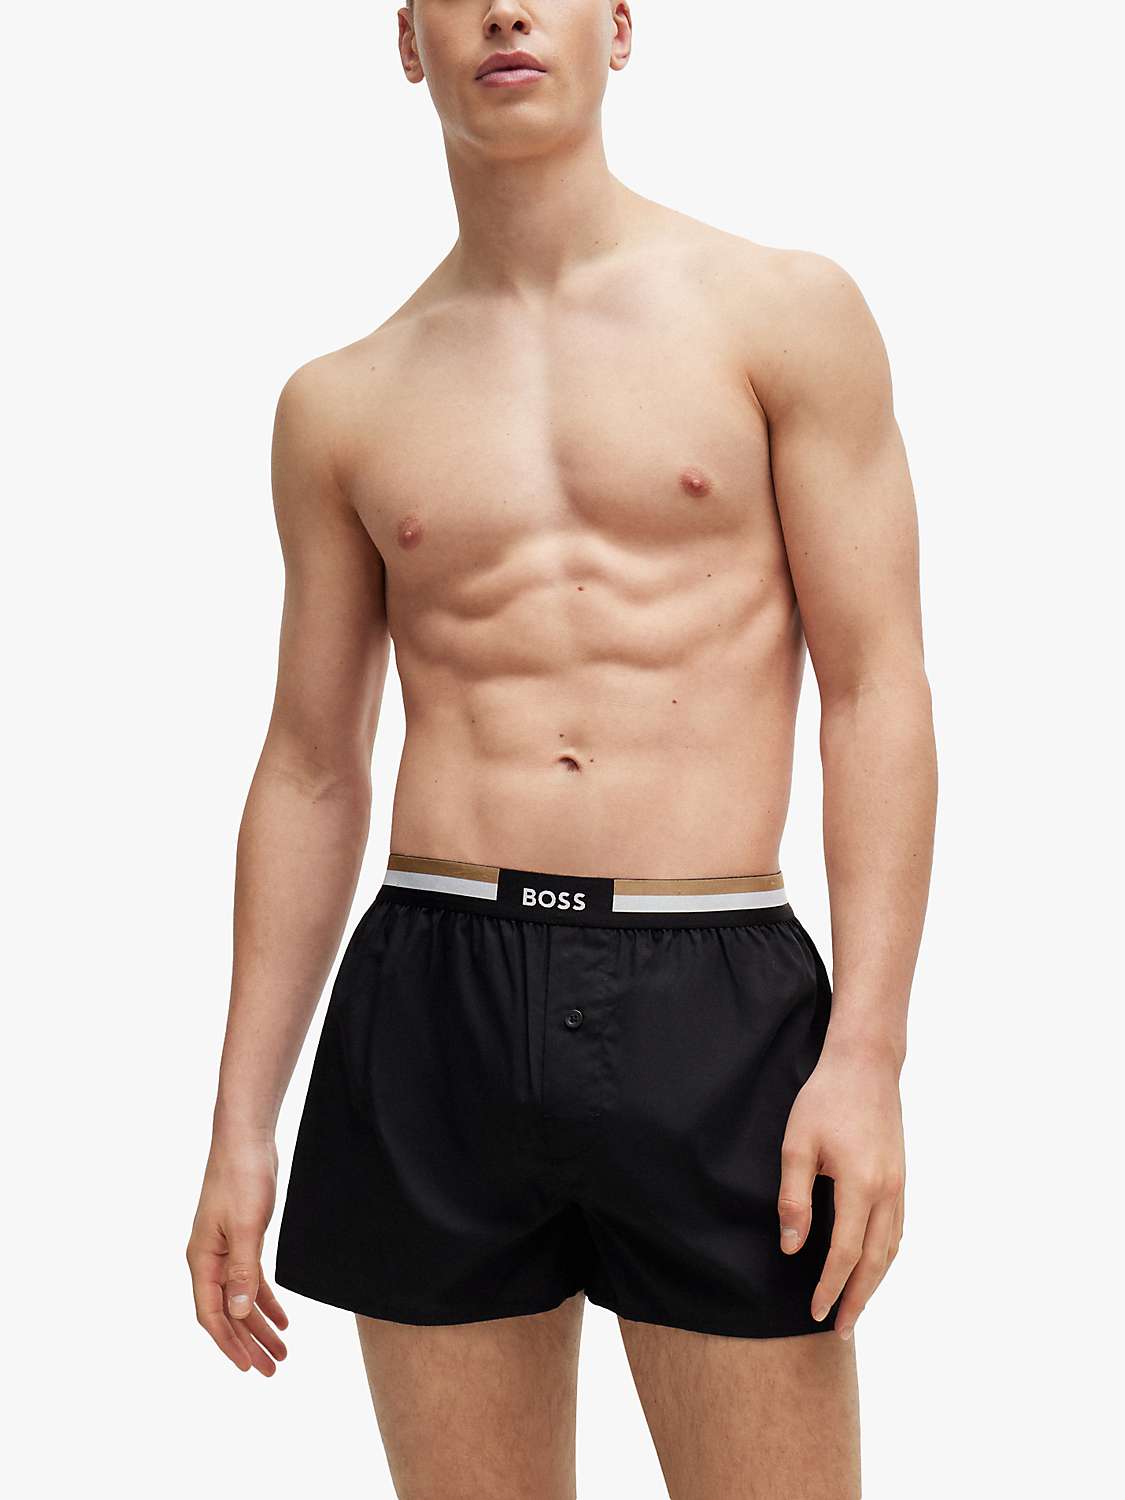 Buy BOSS Boxer Shorts, Pack of 2, Beige/Black Online at johnlewis.com